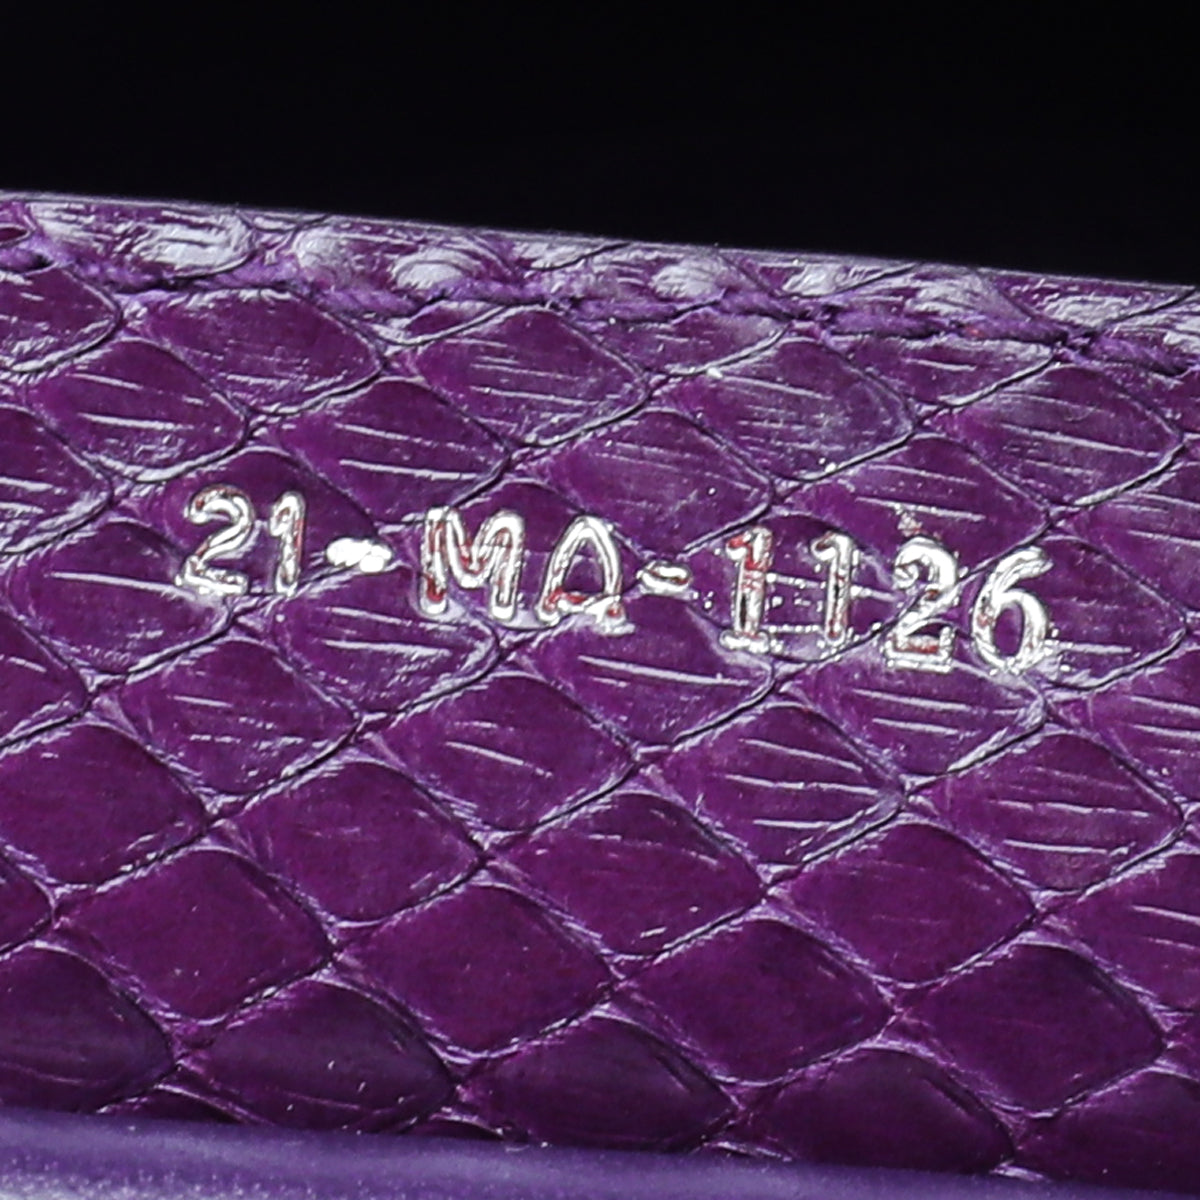 Christian Dior Violet Python Lady Dior Medium Bag